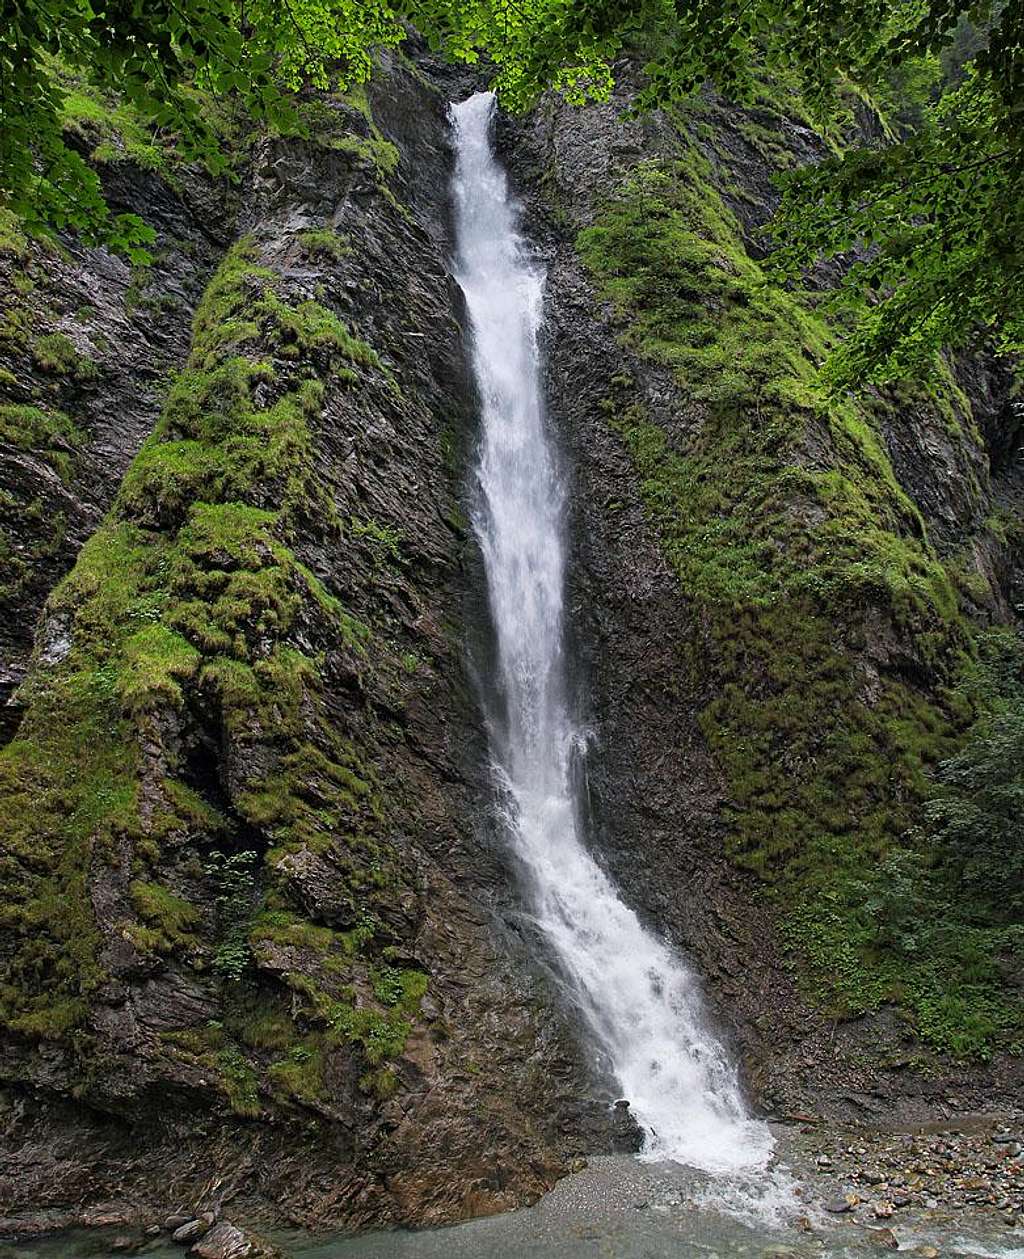 The side waterfall in Liechtensteinklamm